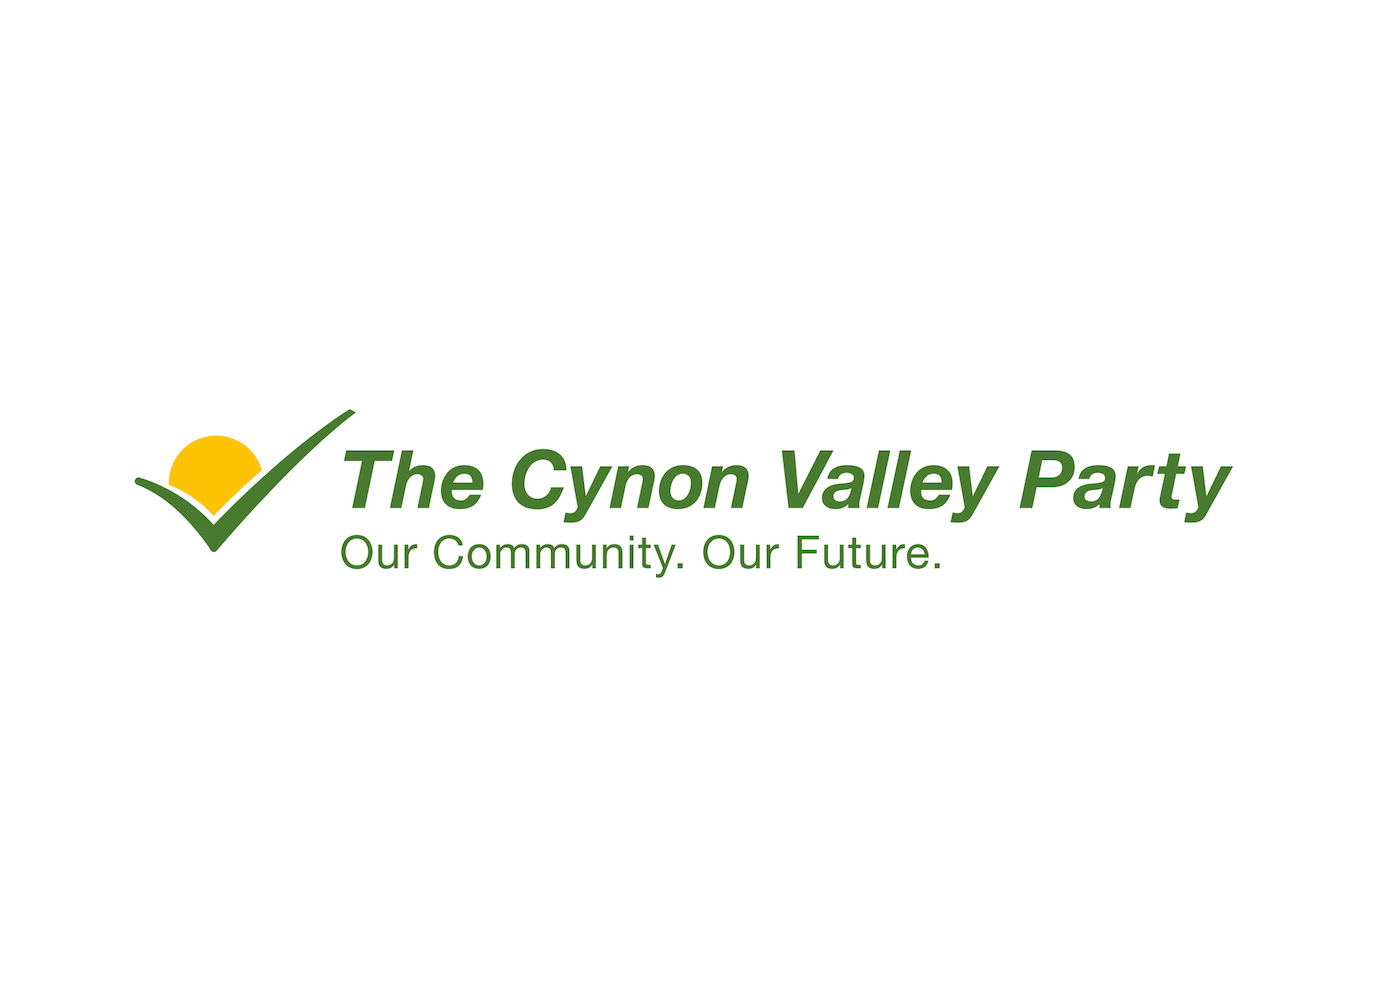 The Cynon Valley Party